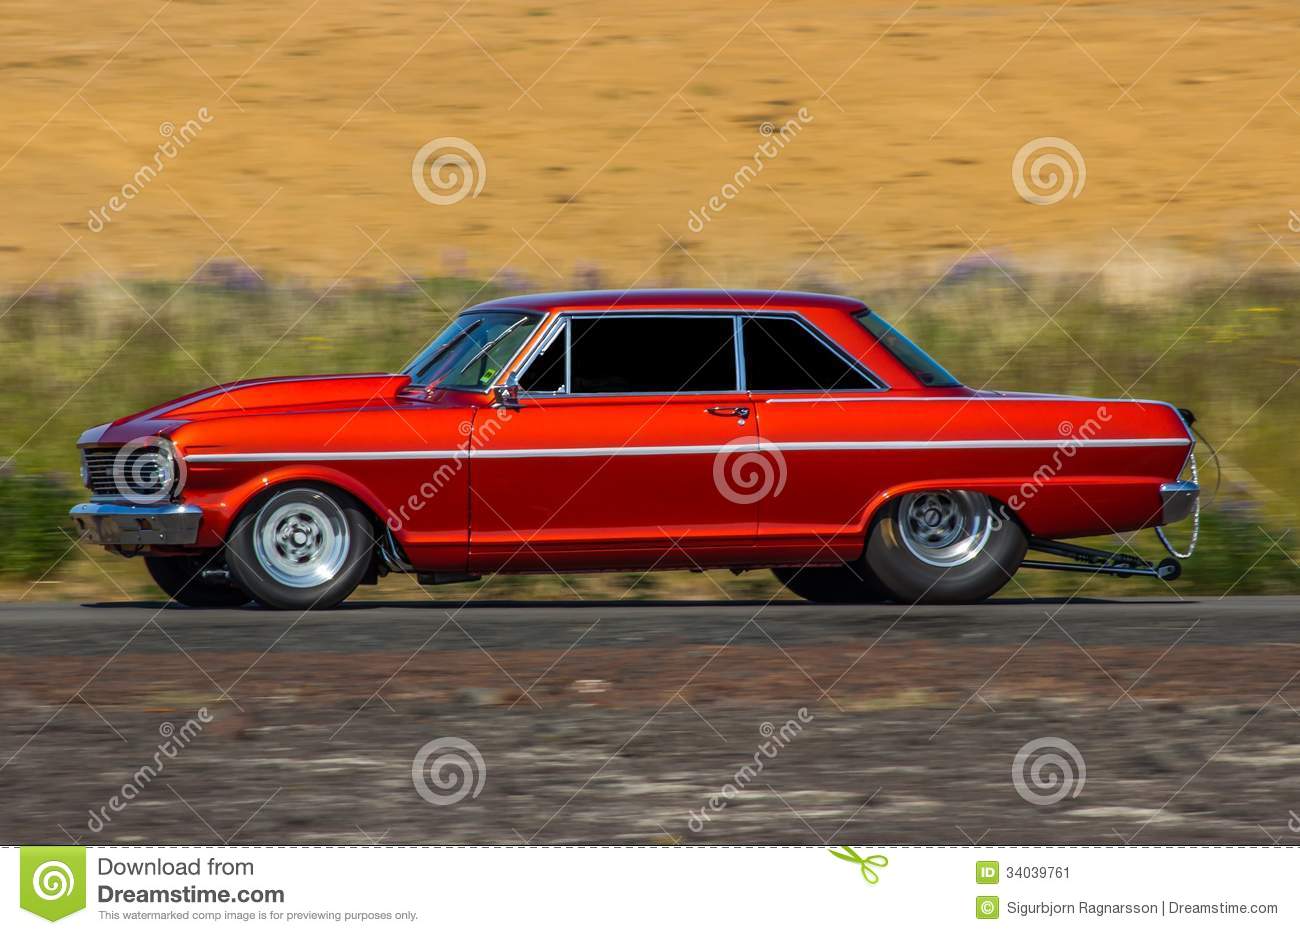 1965 Chevrolet Nova Stock Image   Image  34039761